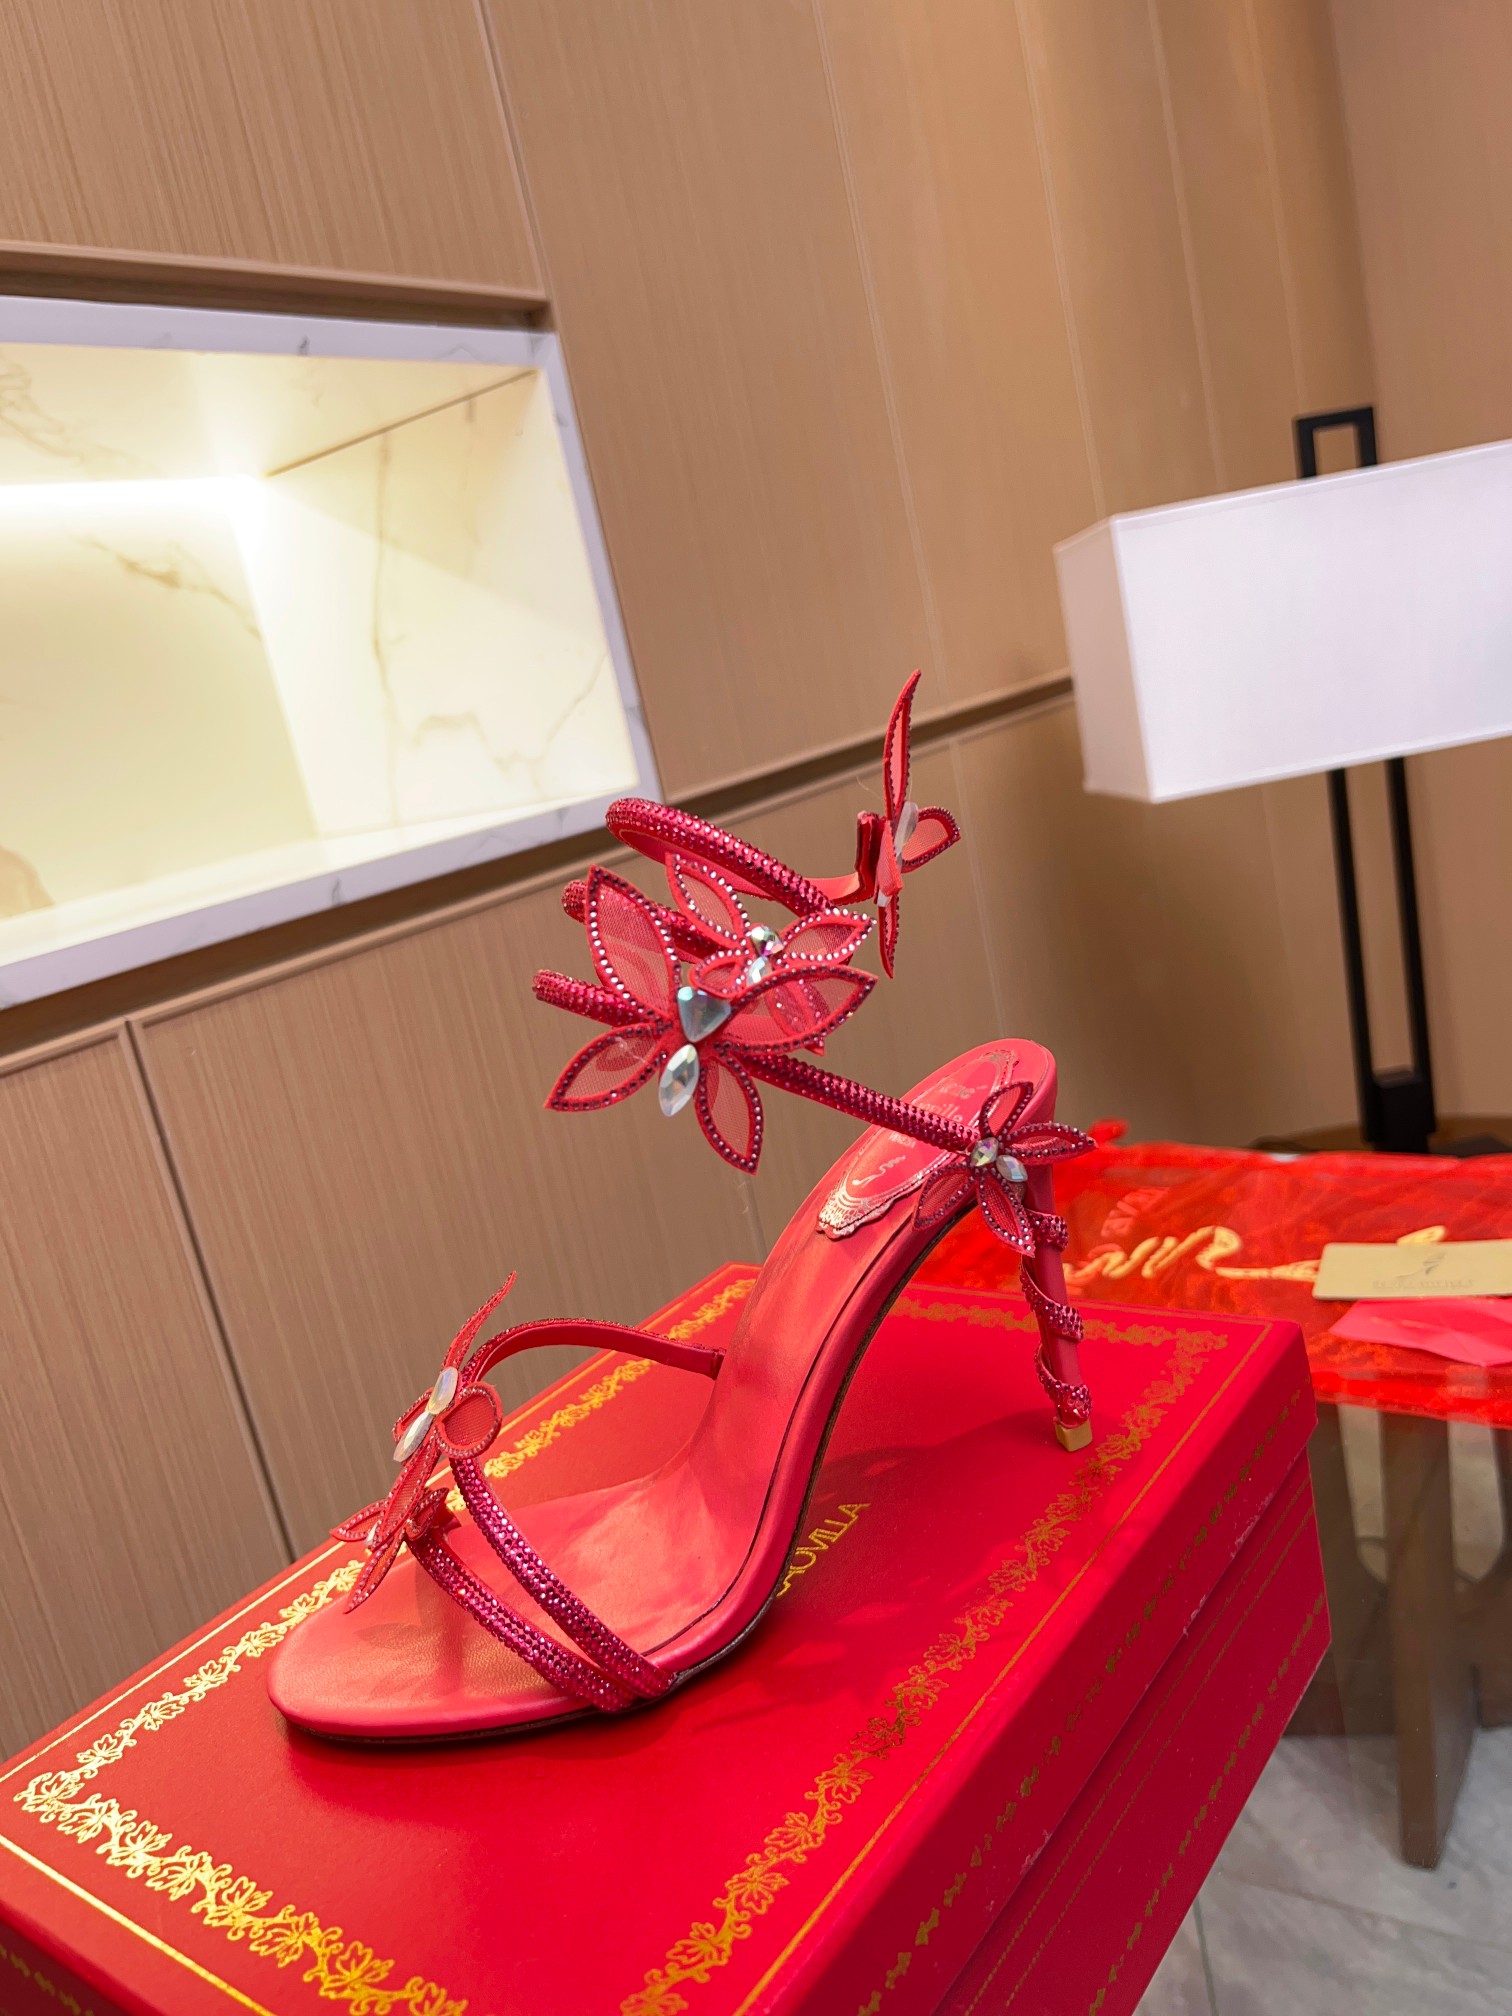 We Offer
 Rene Caovilla Shoes High Heel Pumps Sandals Gold Red White Women Sheepskin Silk Spring/Summer Collection